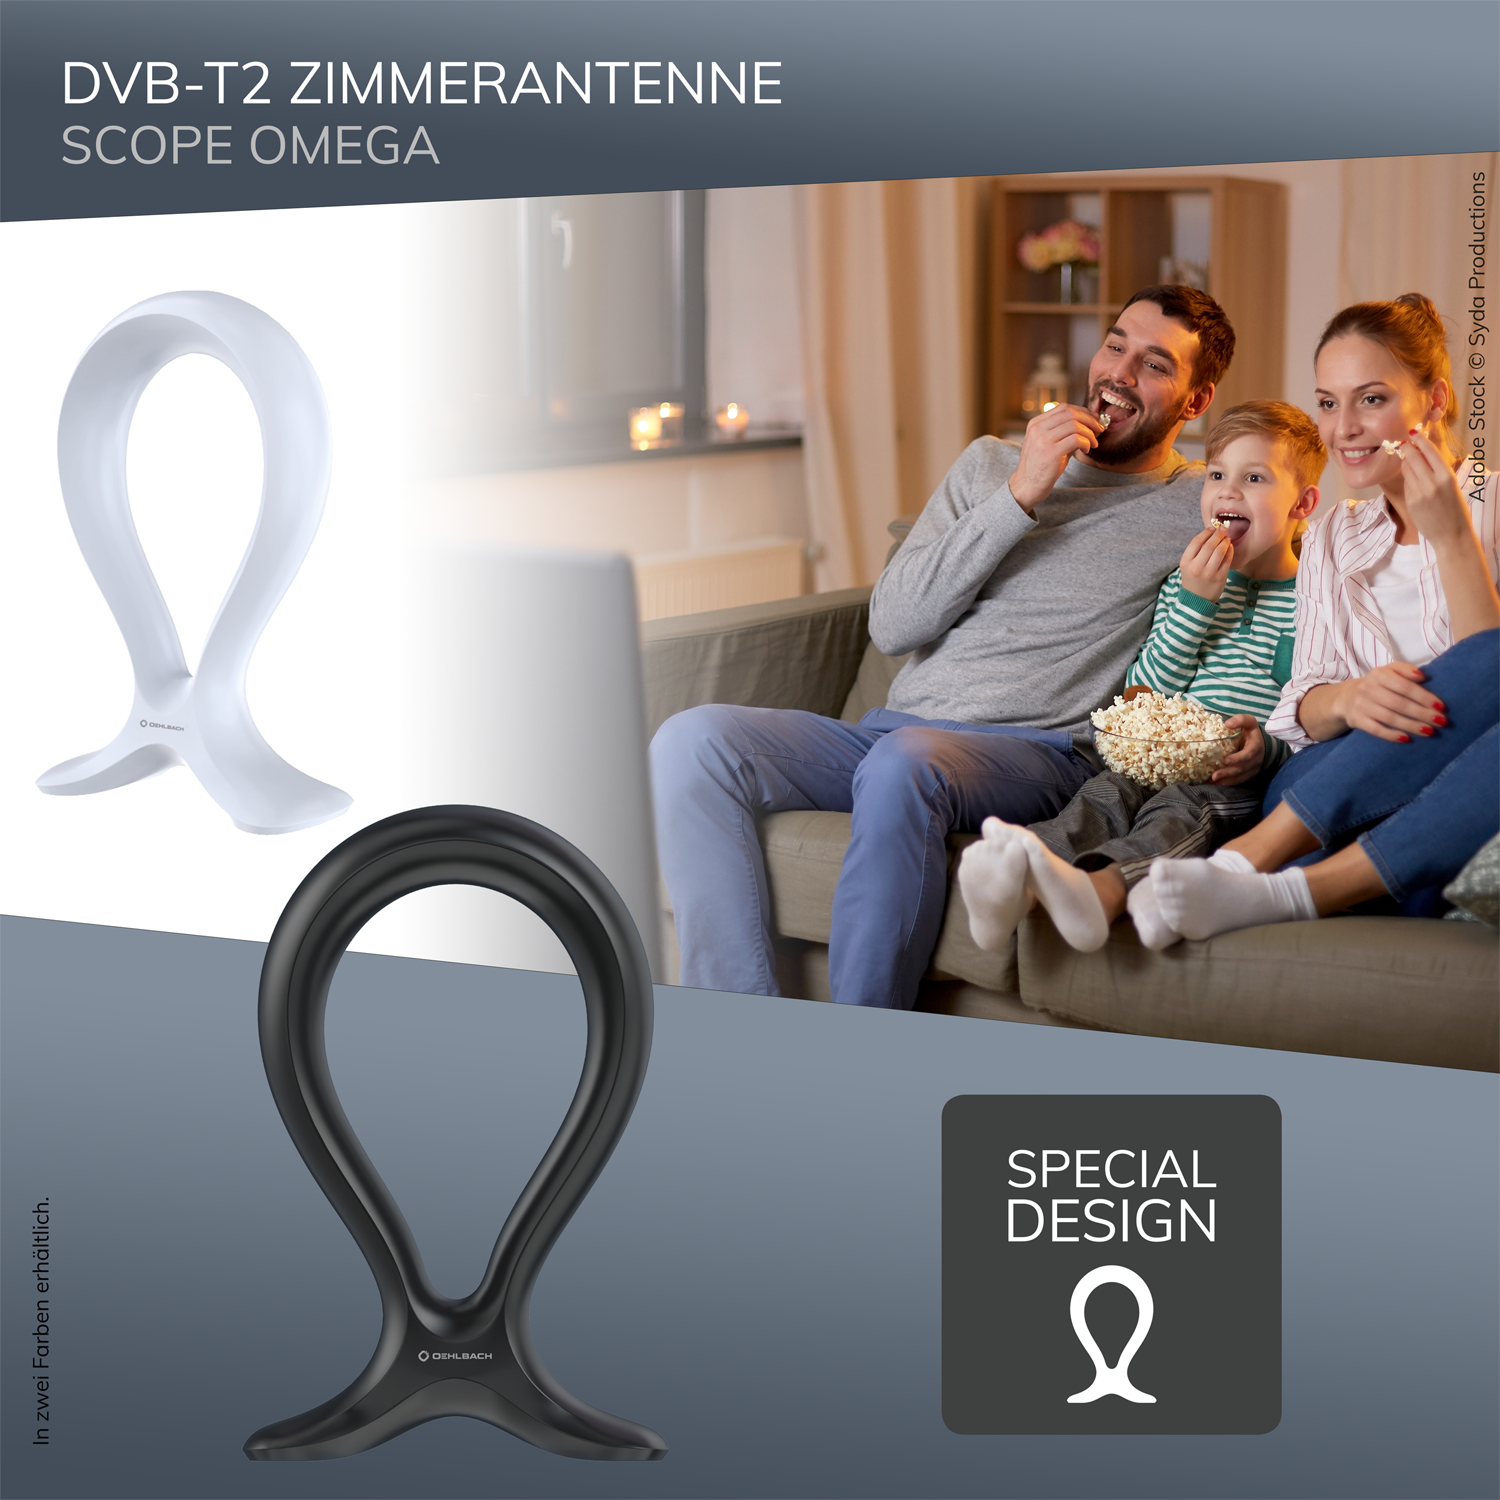 DVB-T2 Zimmerantenne DVB-T2 SCOPE OEHLBACH OMEGA SCHWARZ HD ANTENNE